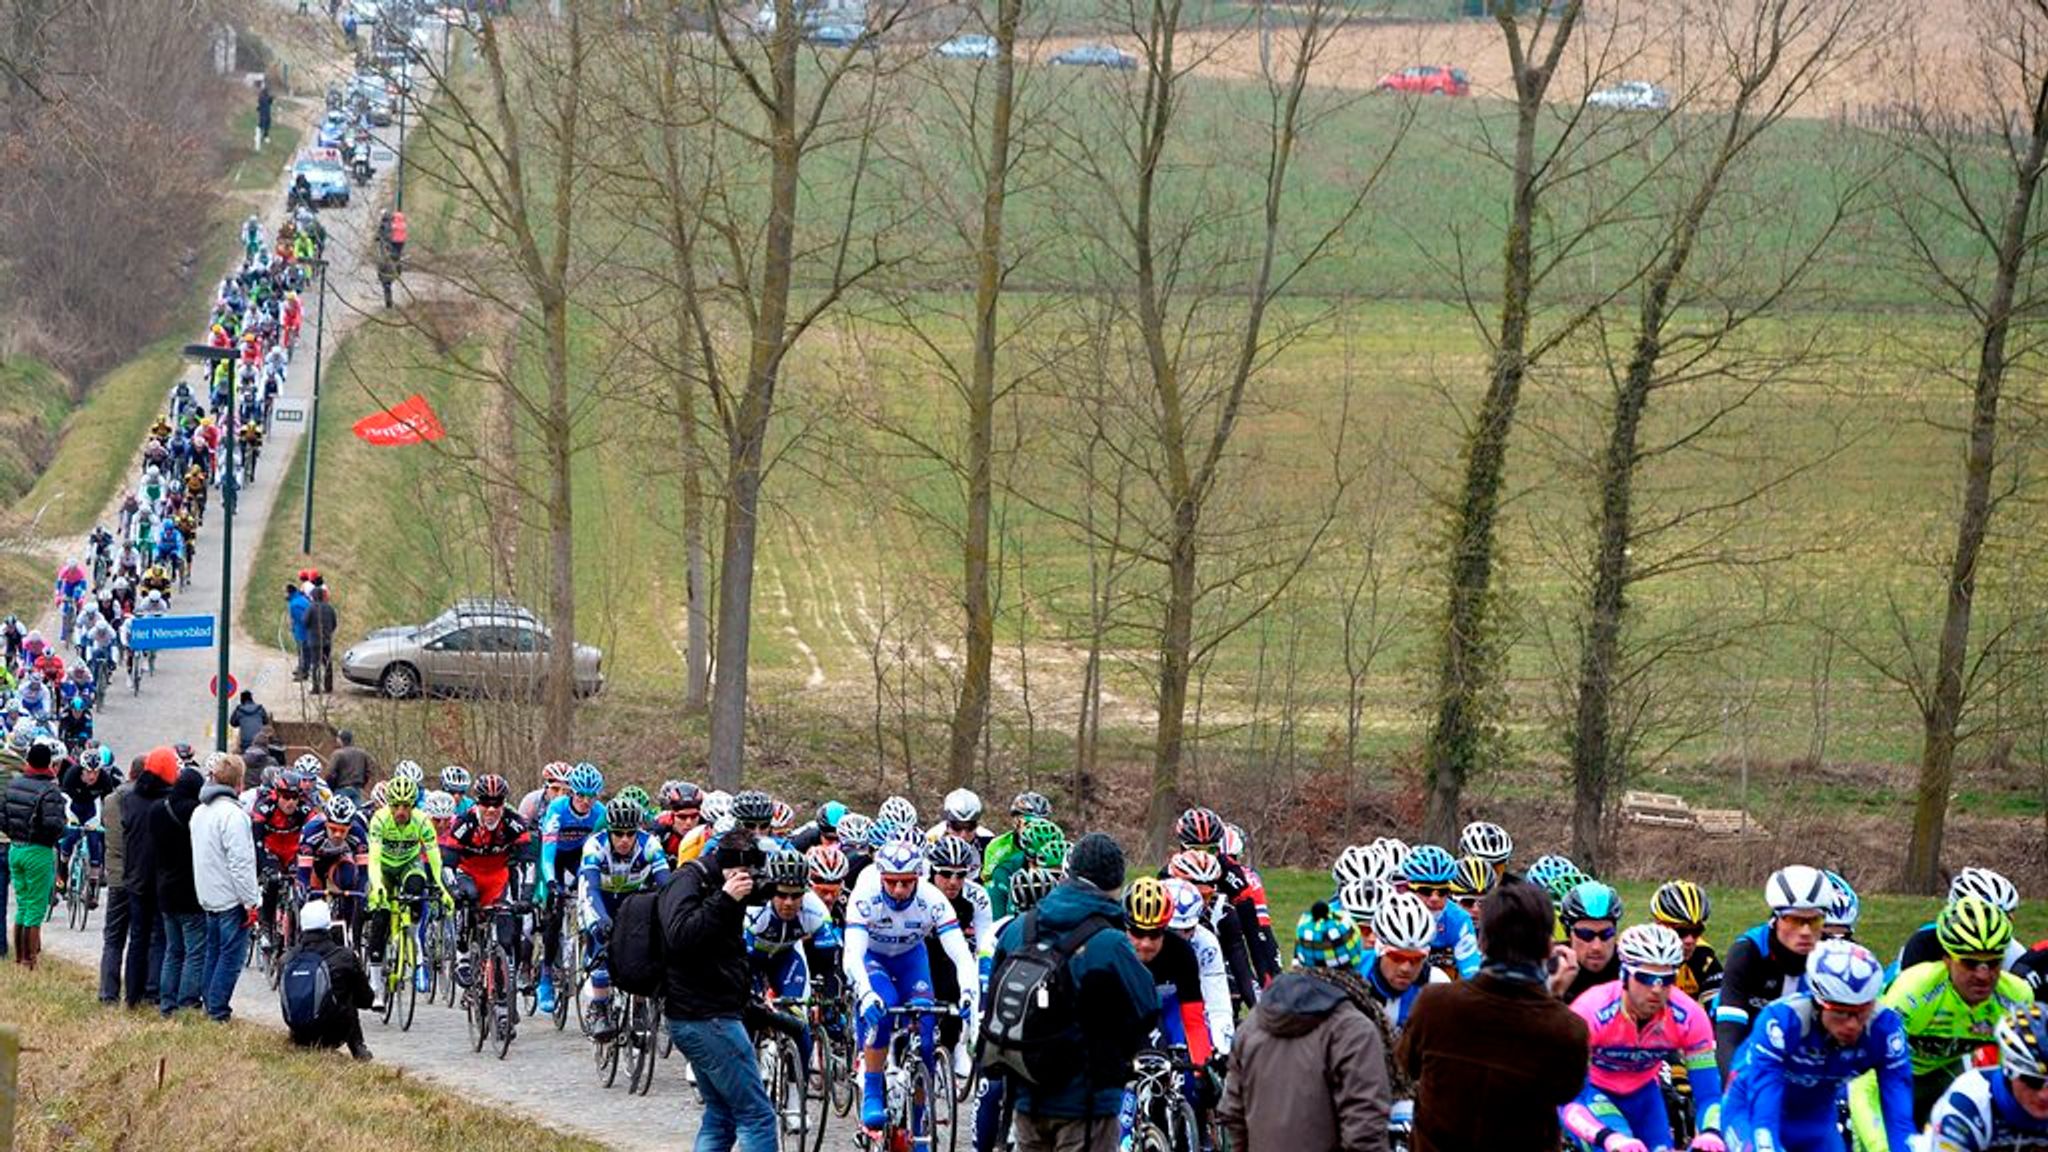 Omloop Het Nieuwsblad and Kuurne-Bruxelles-Kuurne get 2014 Classics under way Cycling News Sky Sports